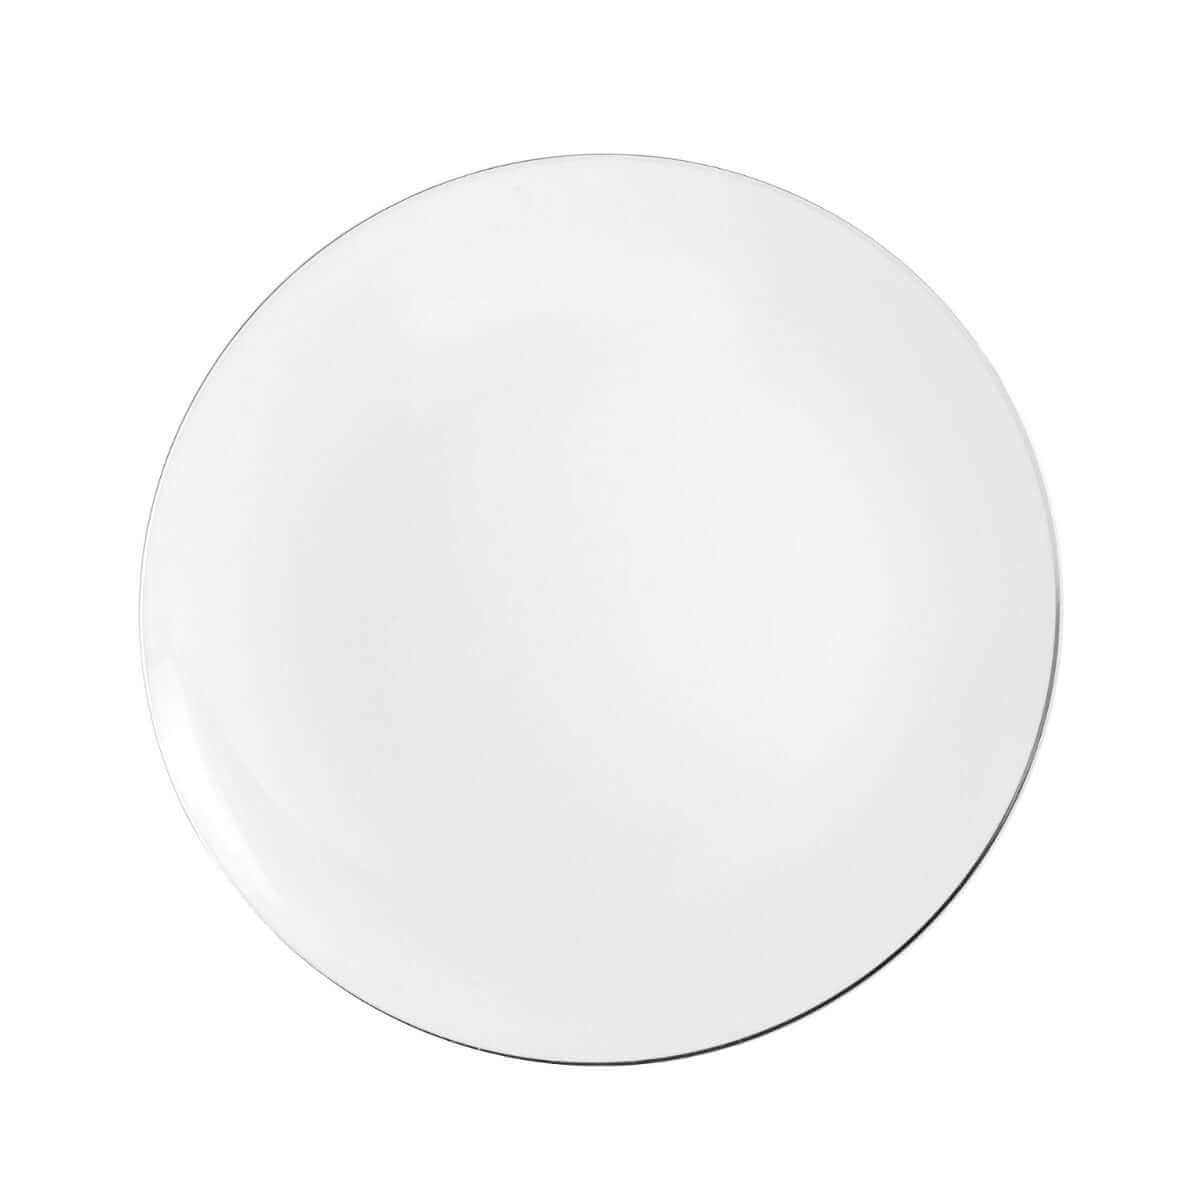 10" Classic Silver Design Plastic Plates (40 Count) - Yom Tov Settings